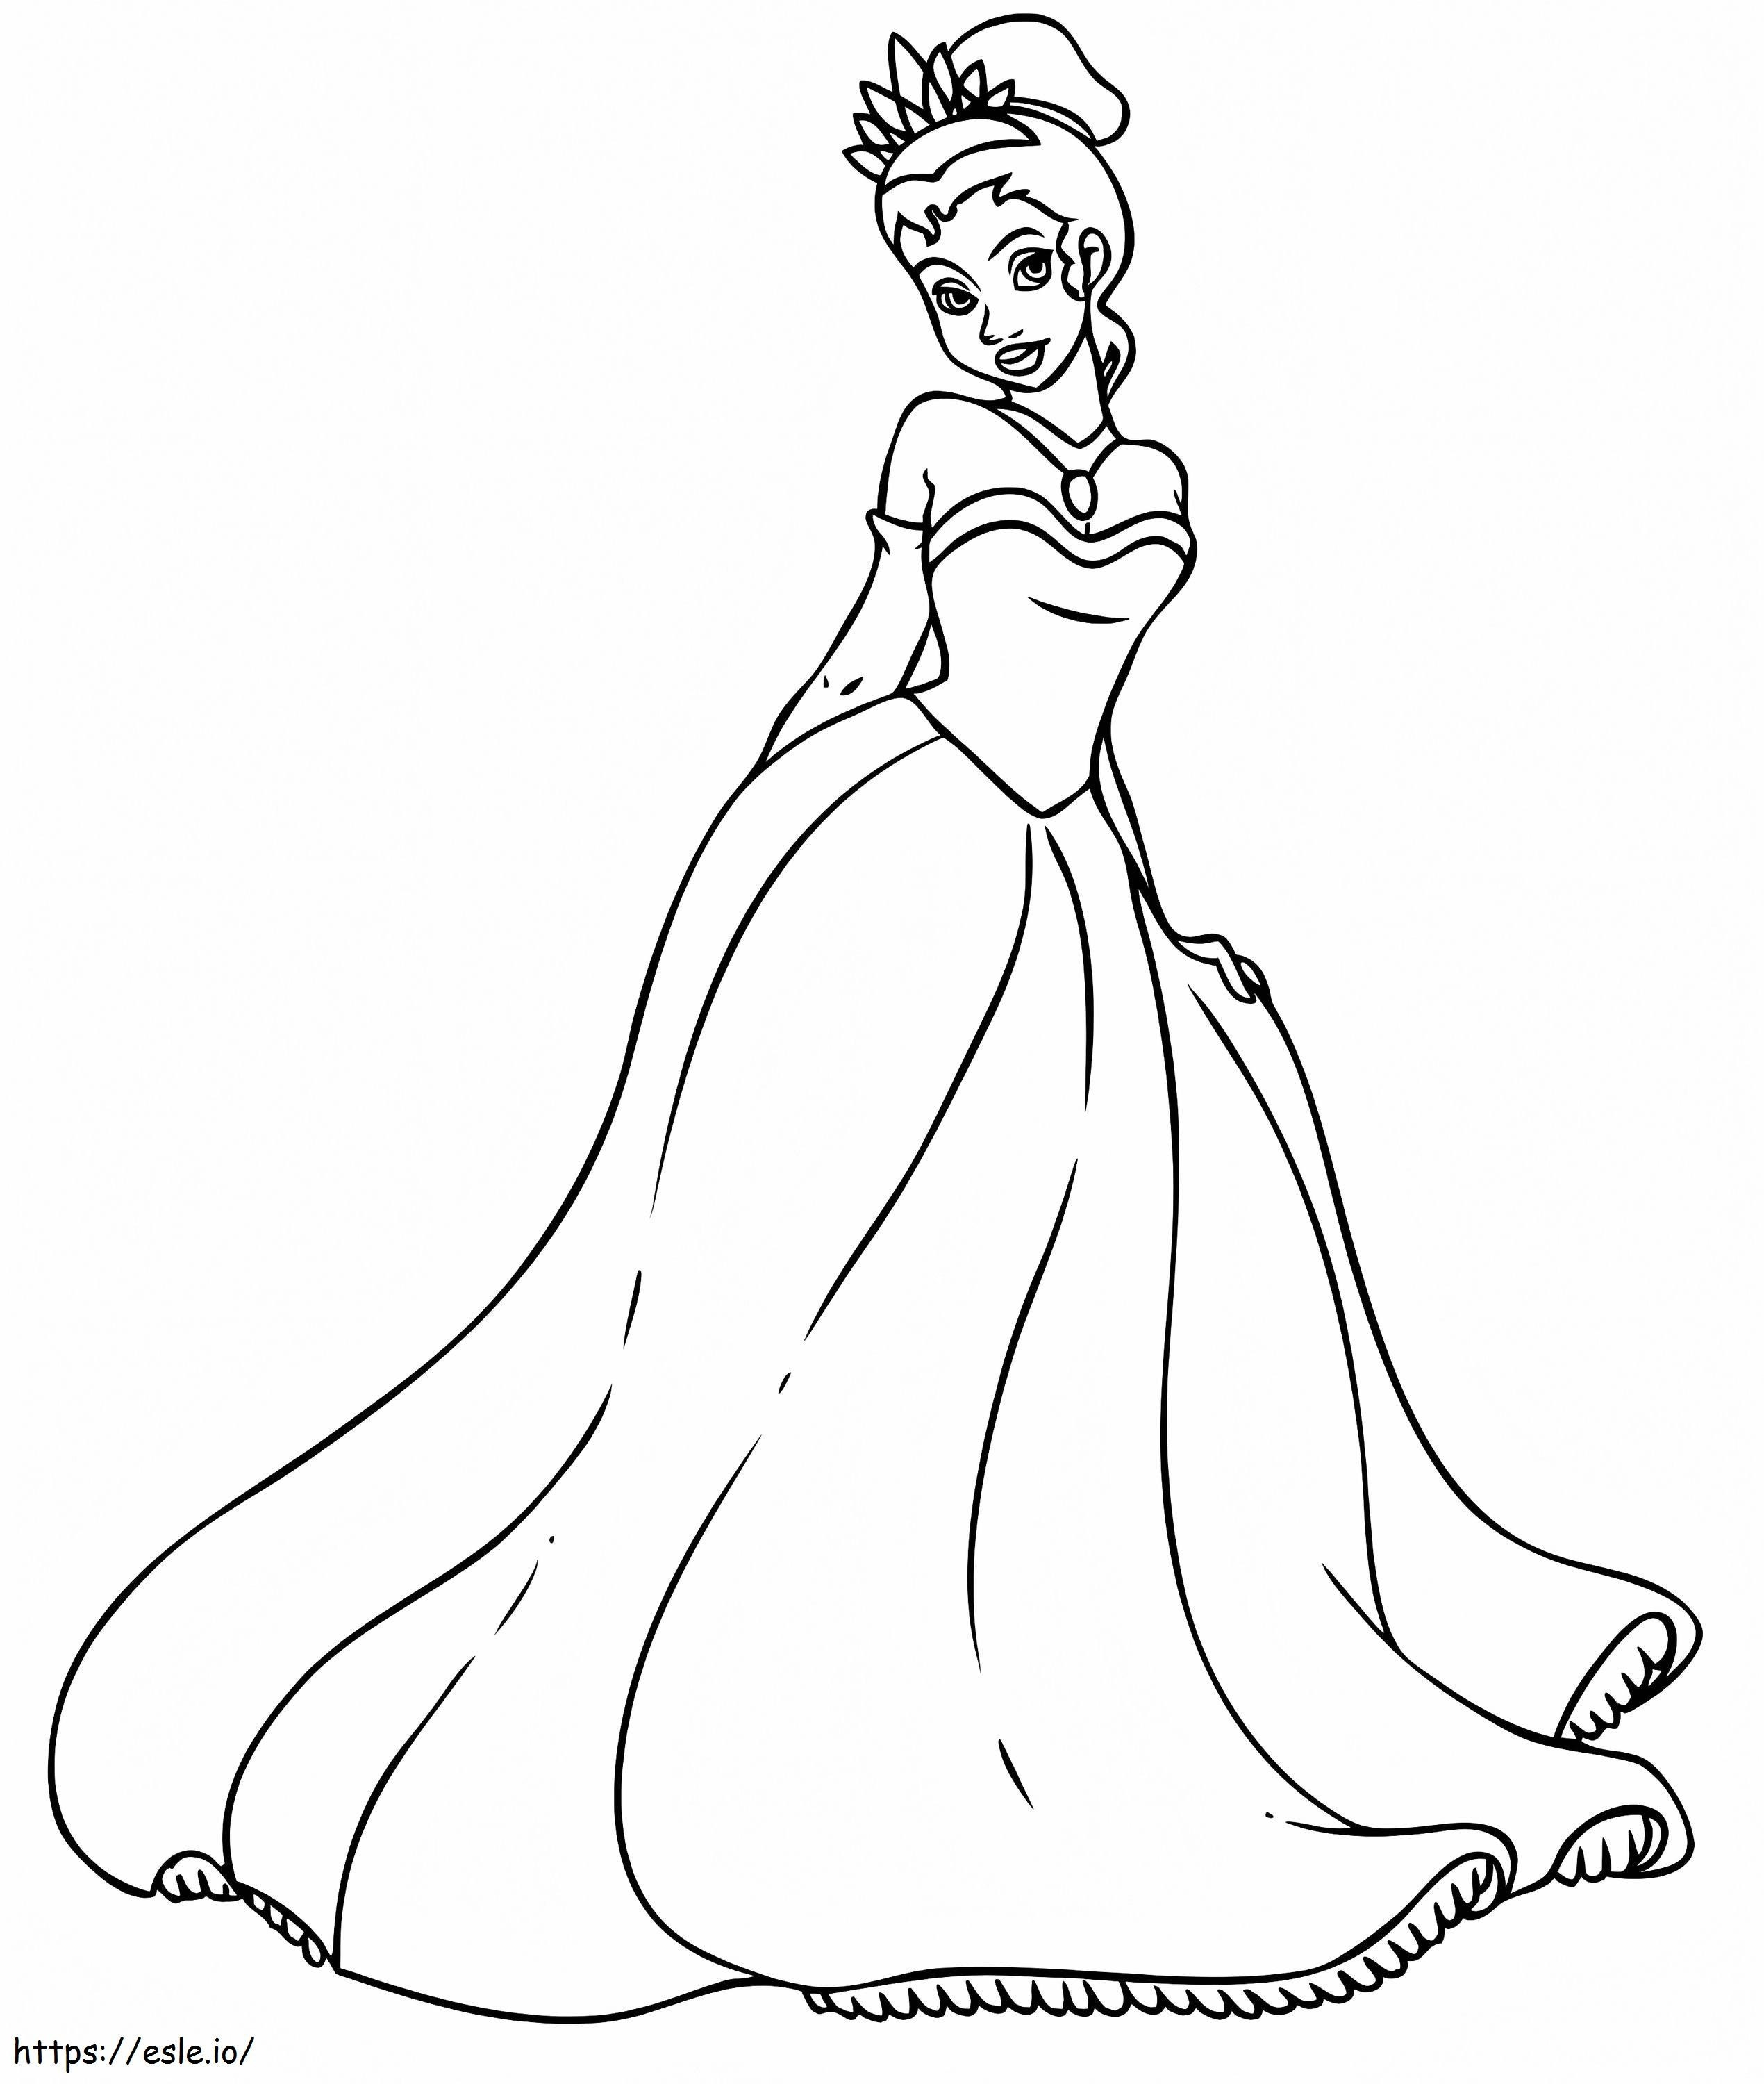 Coloriage Belle princesse Tiana 2 à imprimer dessin